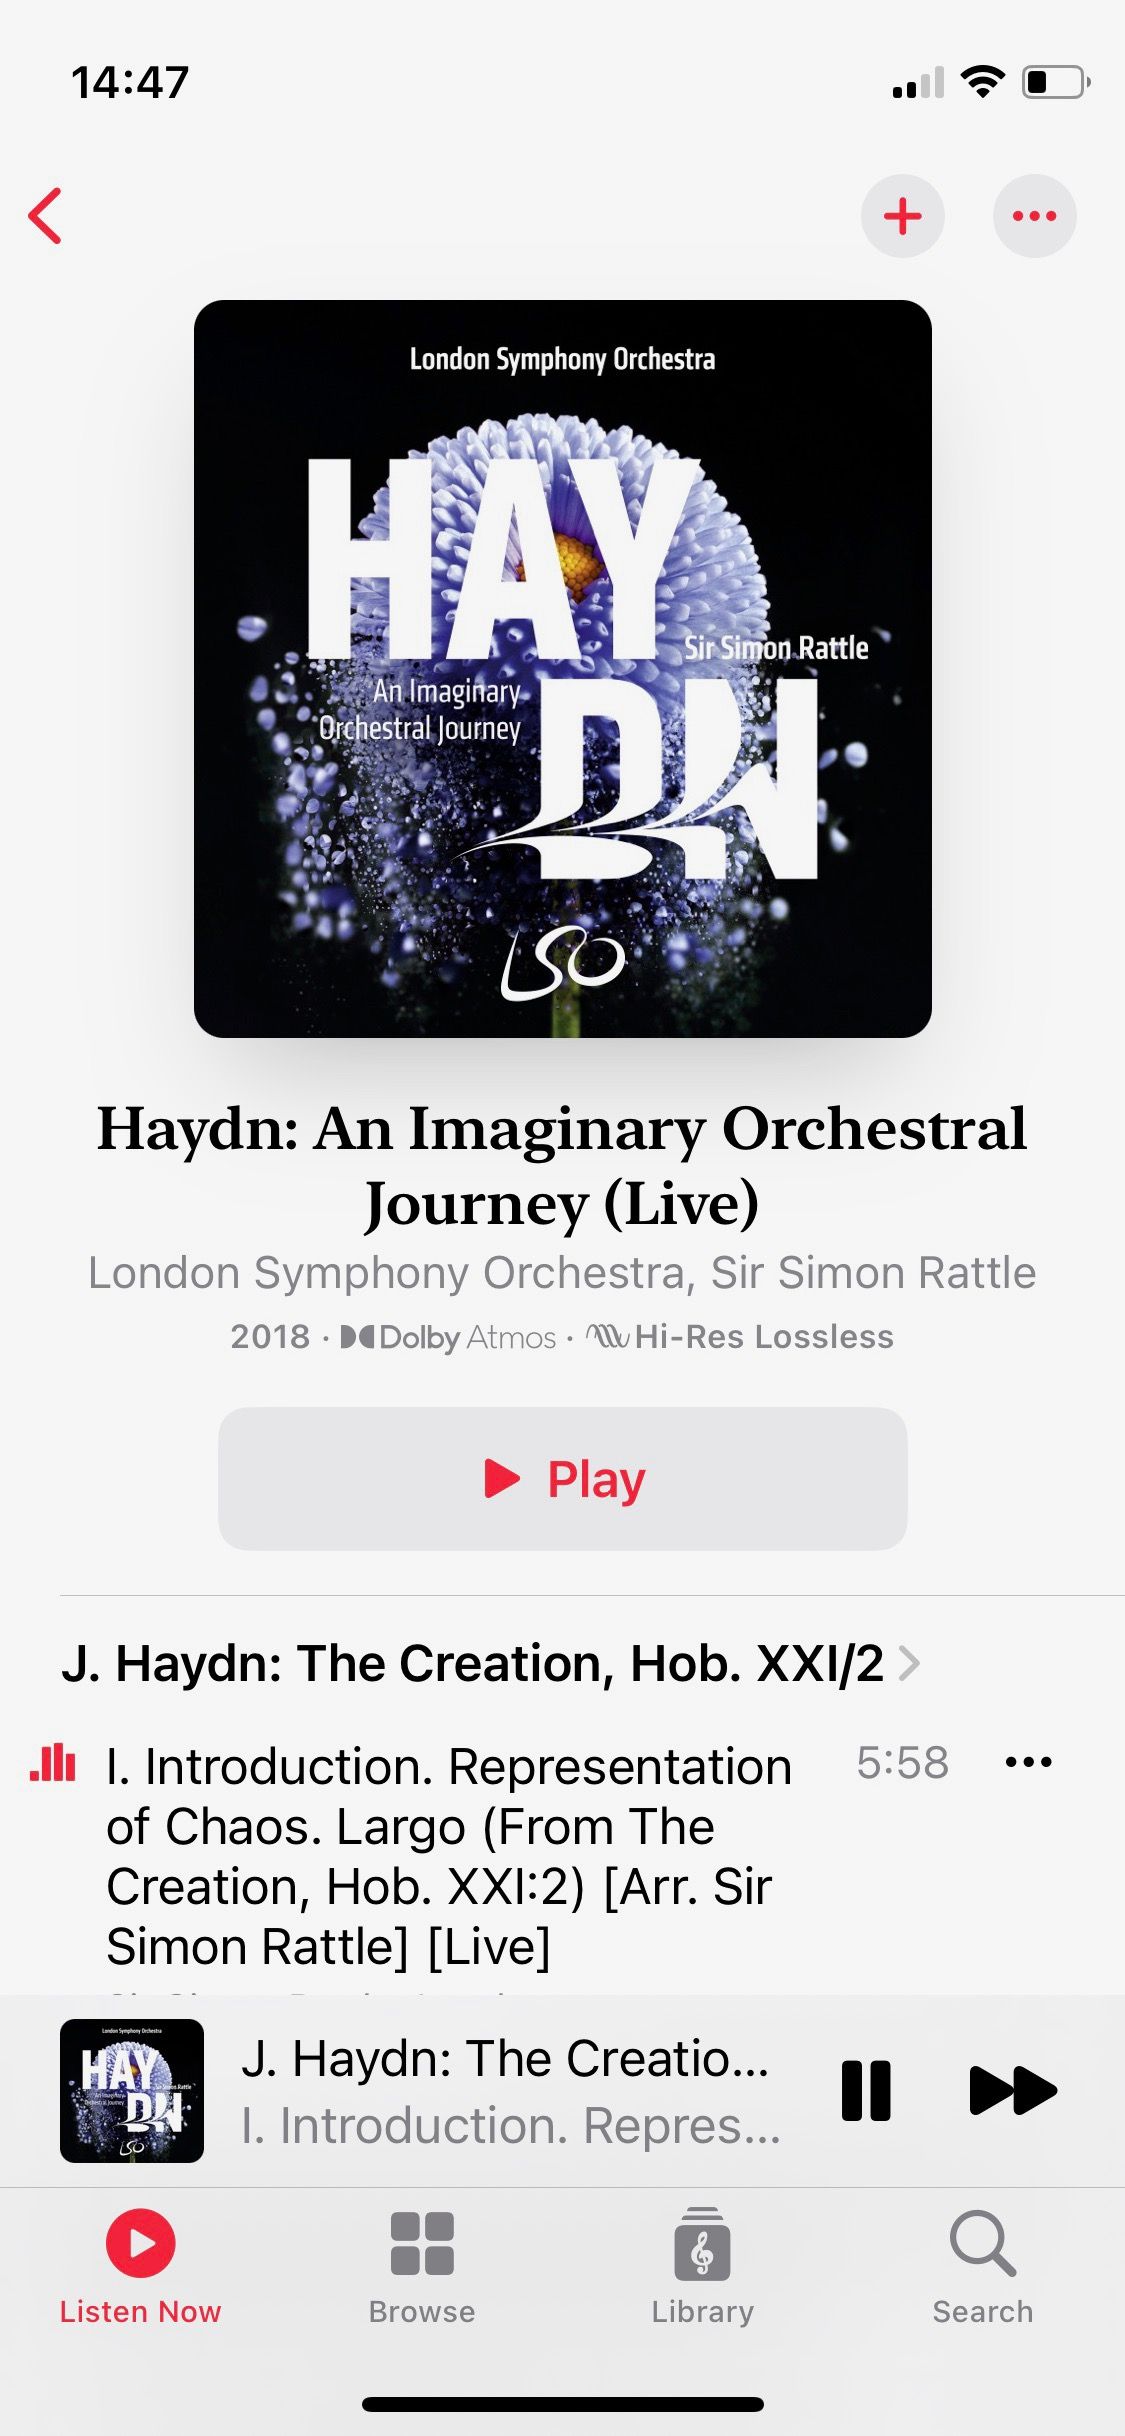 Screenshot of Apple Music Classical Haydn LSO album in Spatial Audio